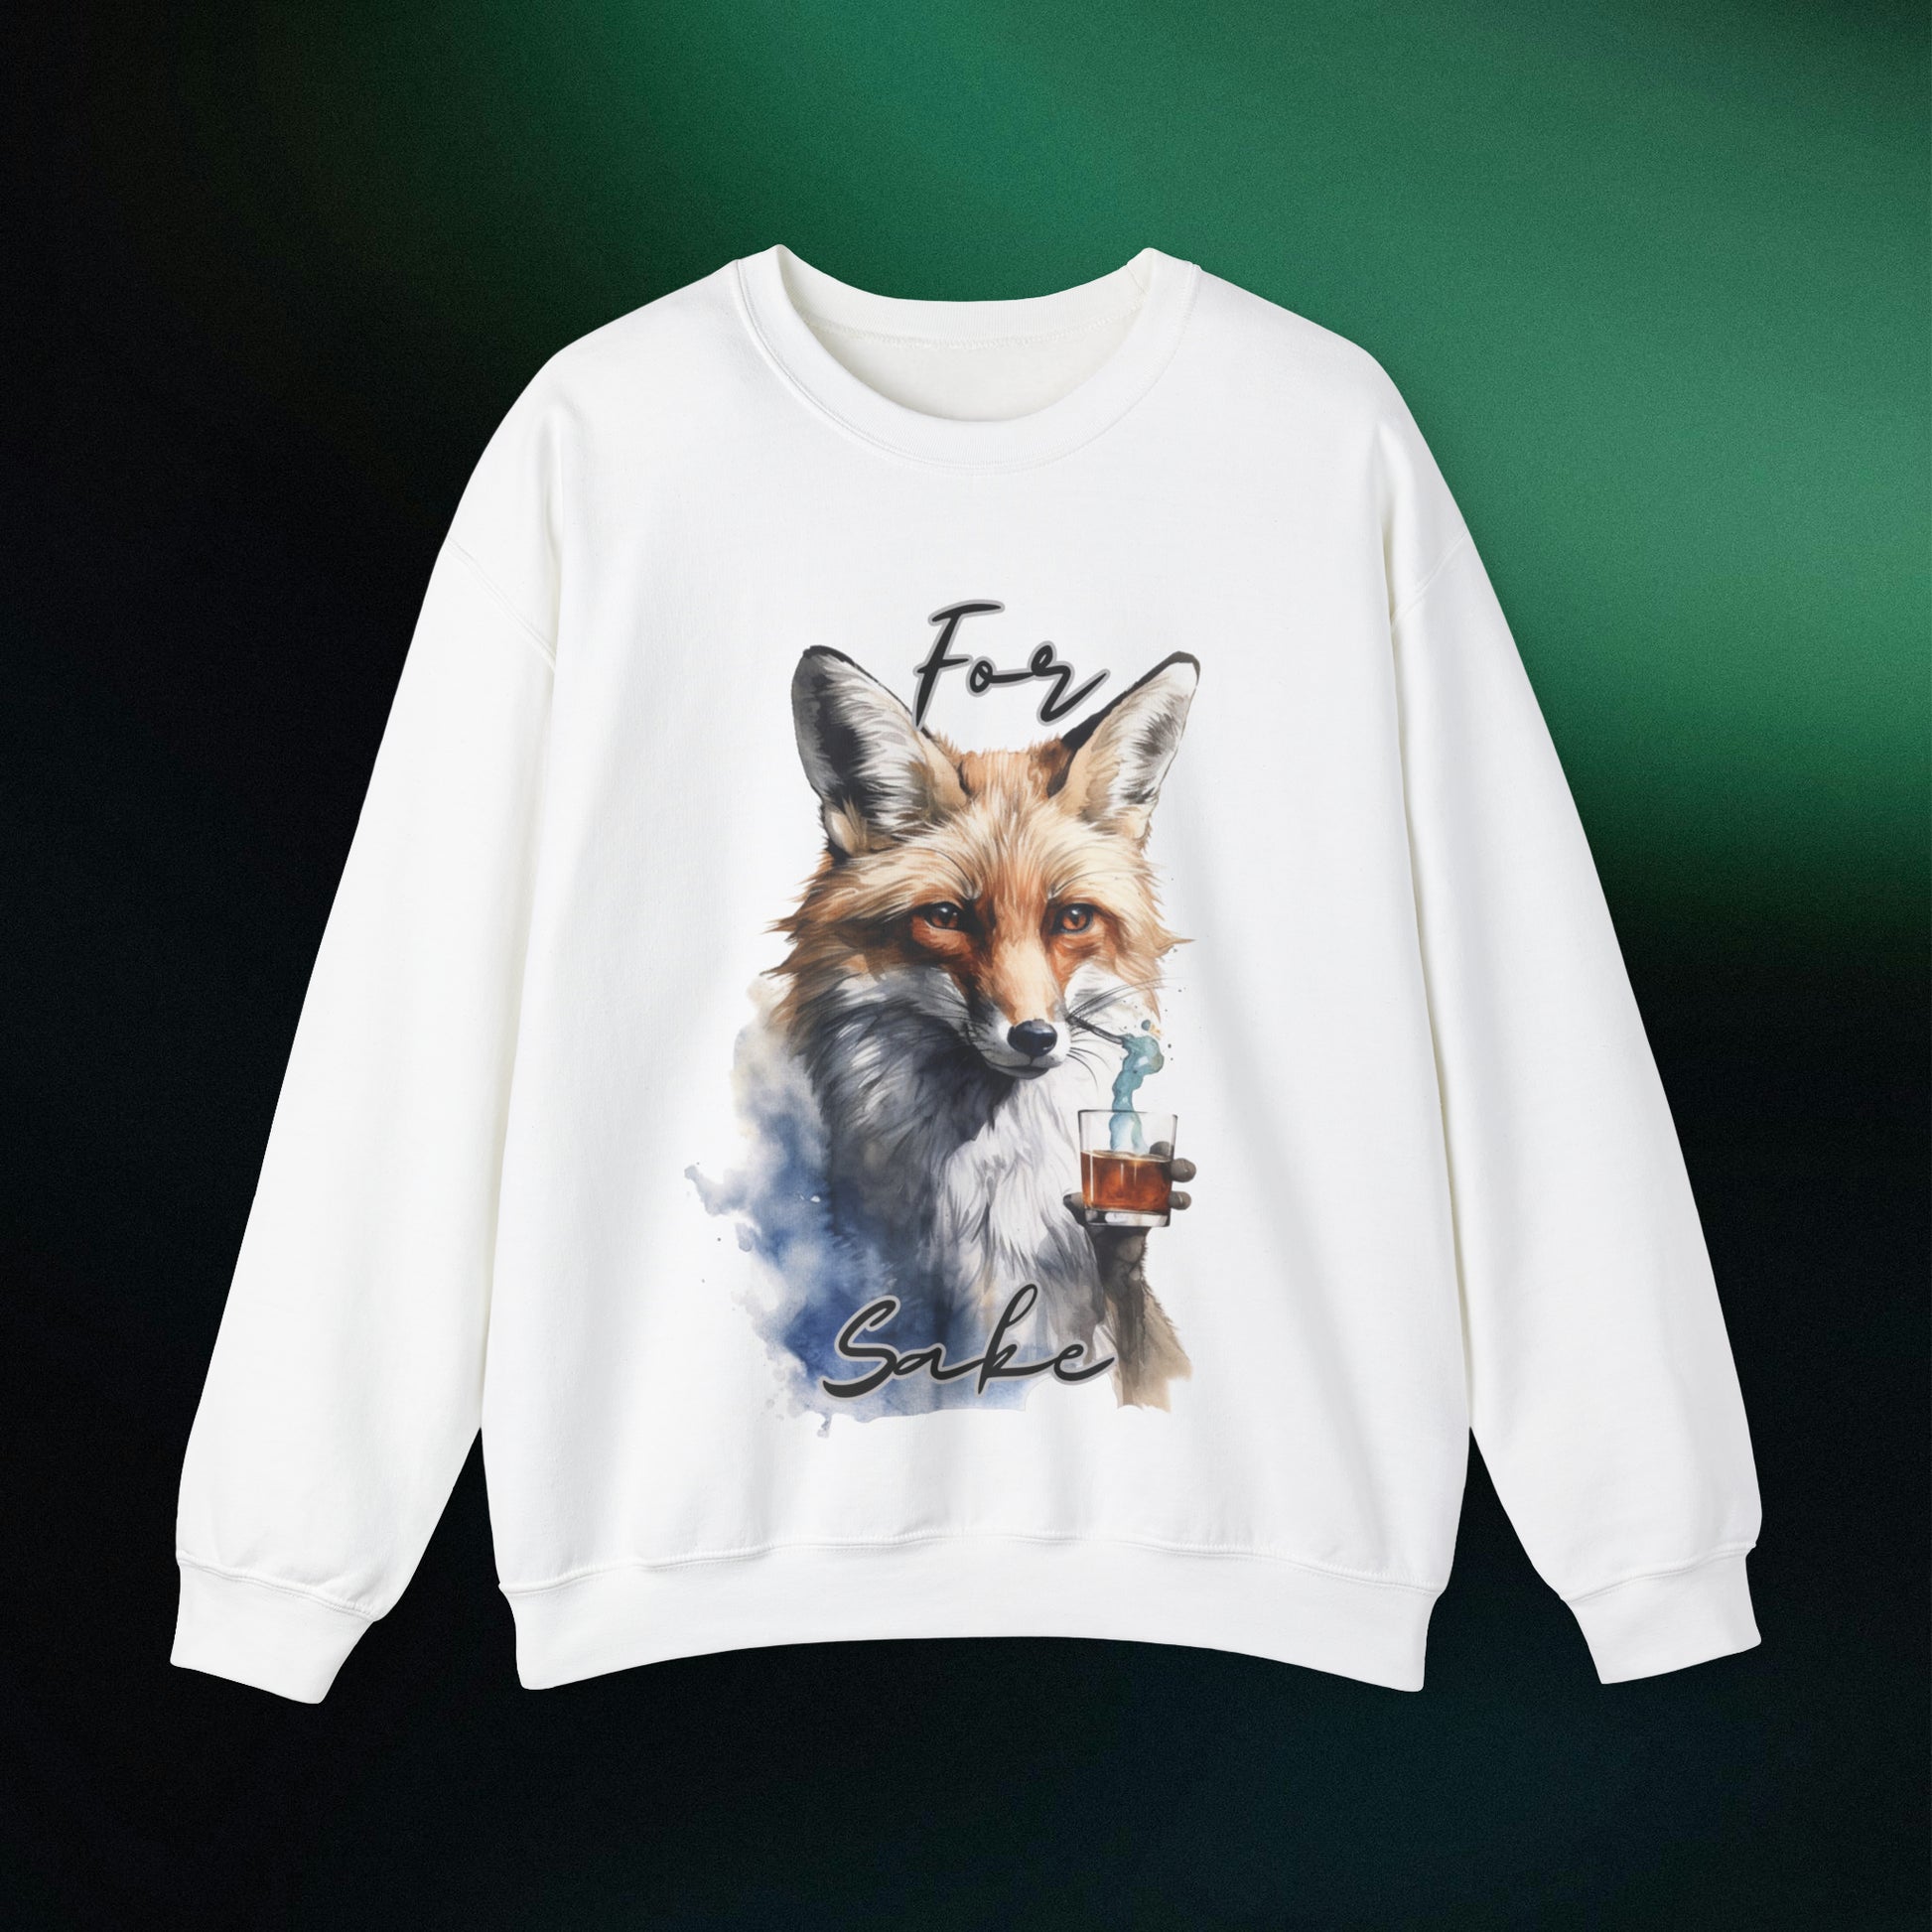 For Fox Sake: Funny Fox Sweatshirt | Gift for Fox Lover | Animal Lover Shirt - Cute Fox Gift for Nature Enthusiasts Sweatshirt S White 